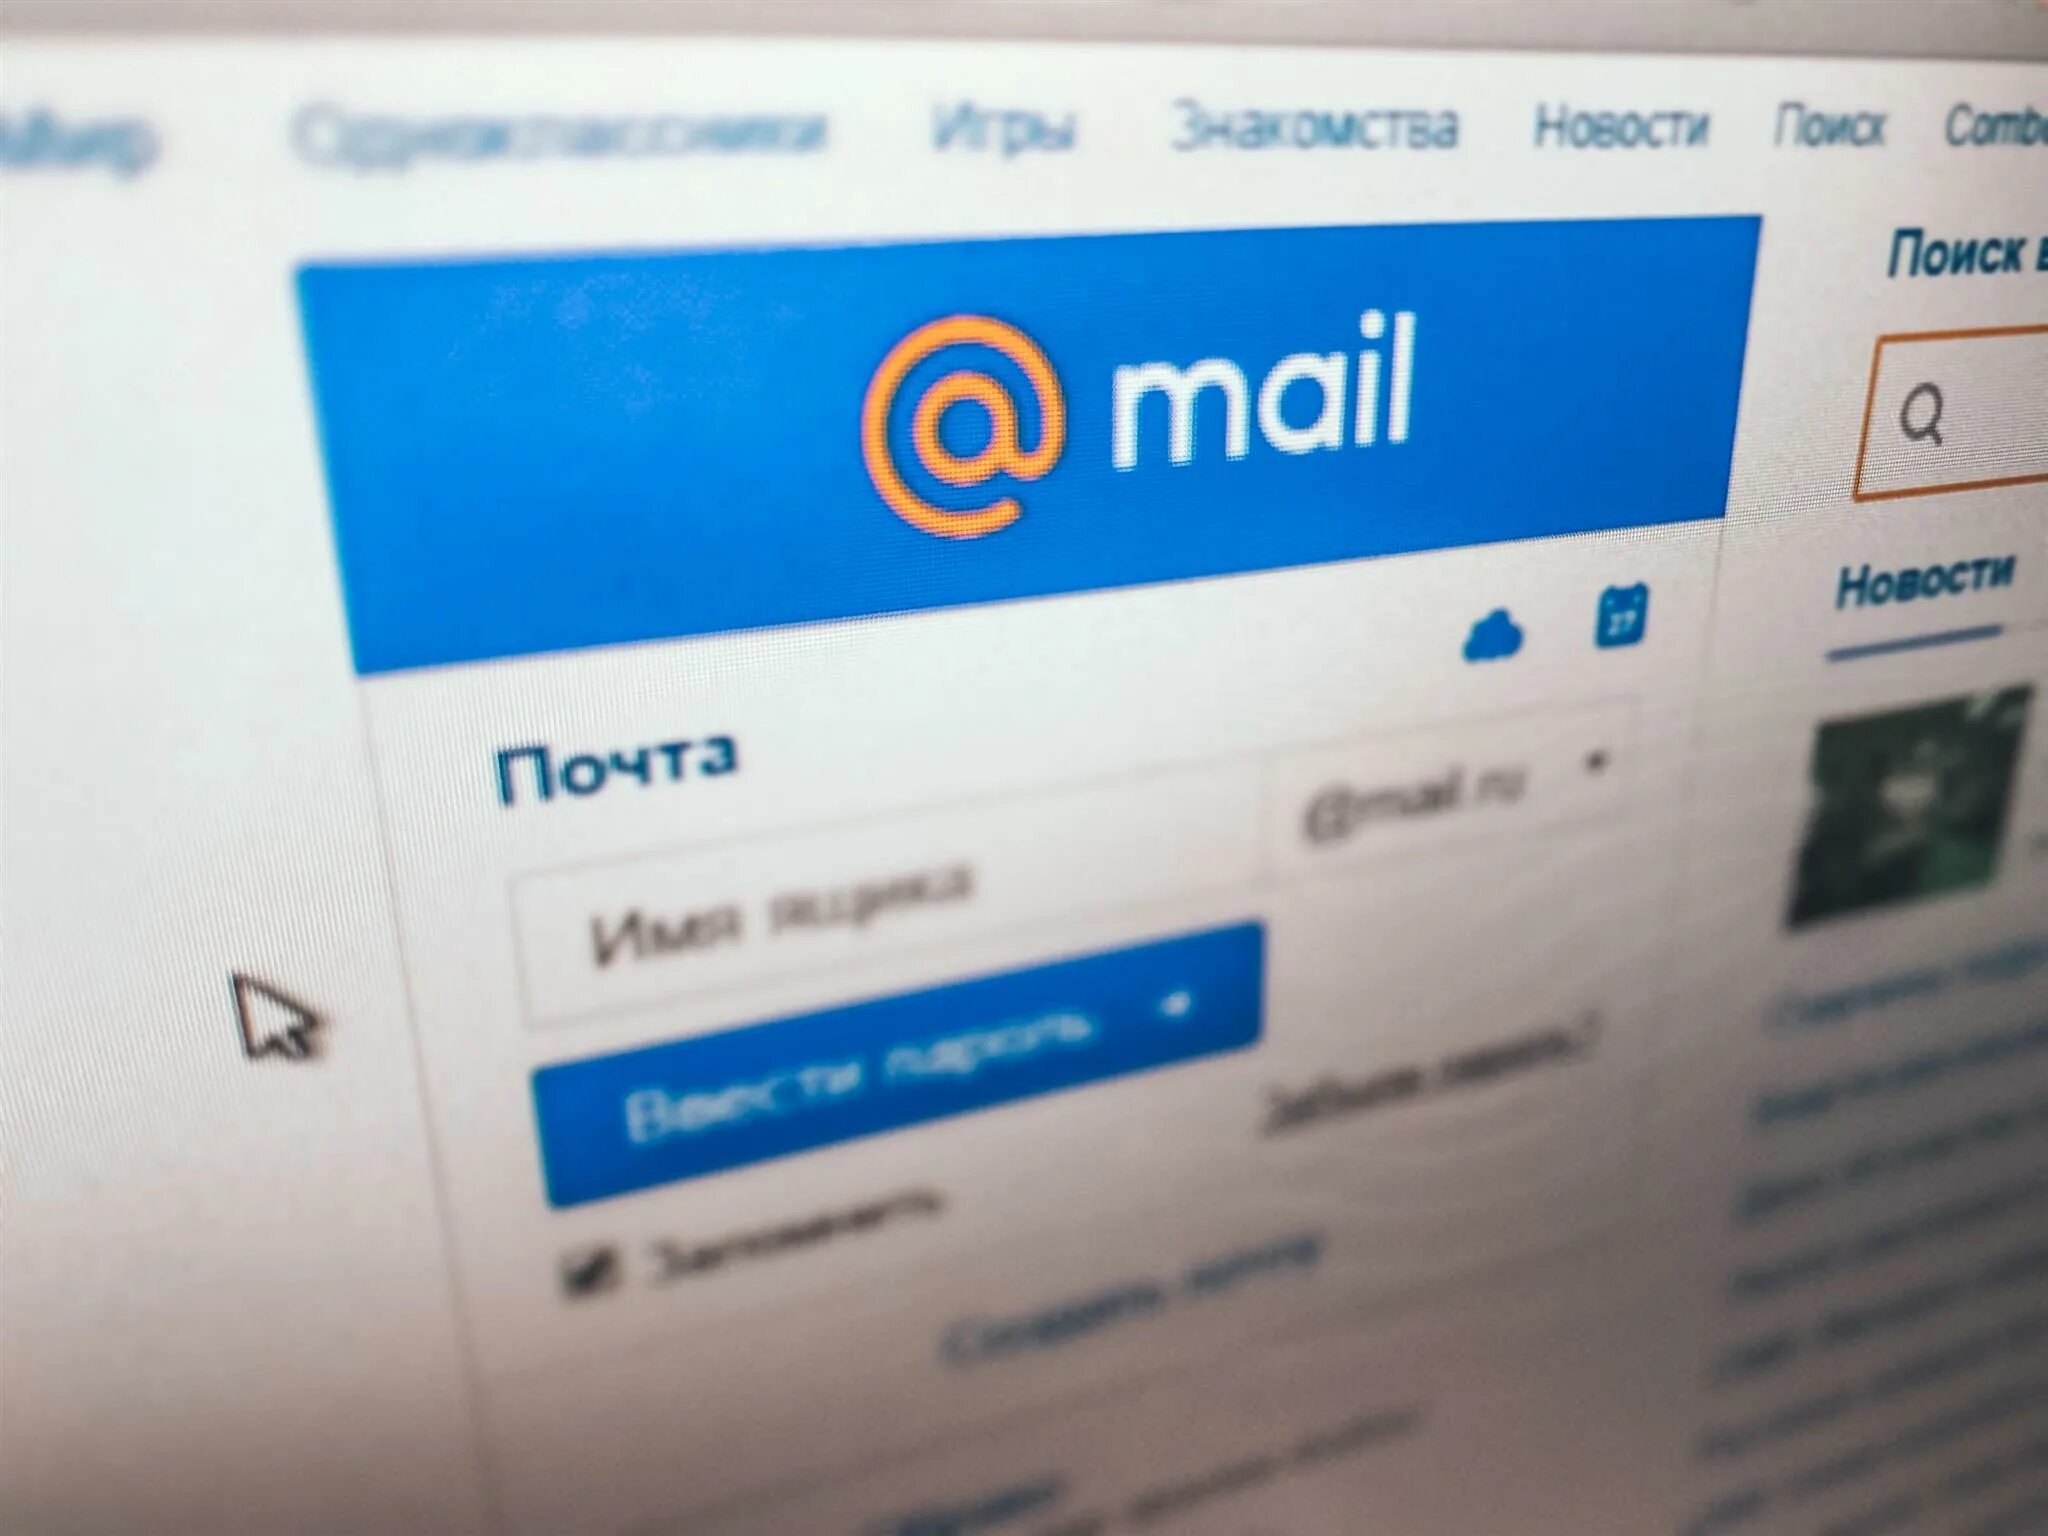 Making mail ru. Mail. Почта майл ру. Mail фото. Фото почты майл ру.